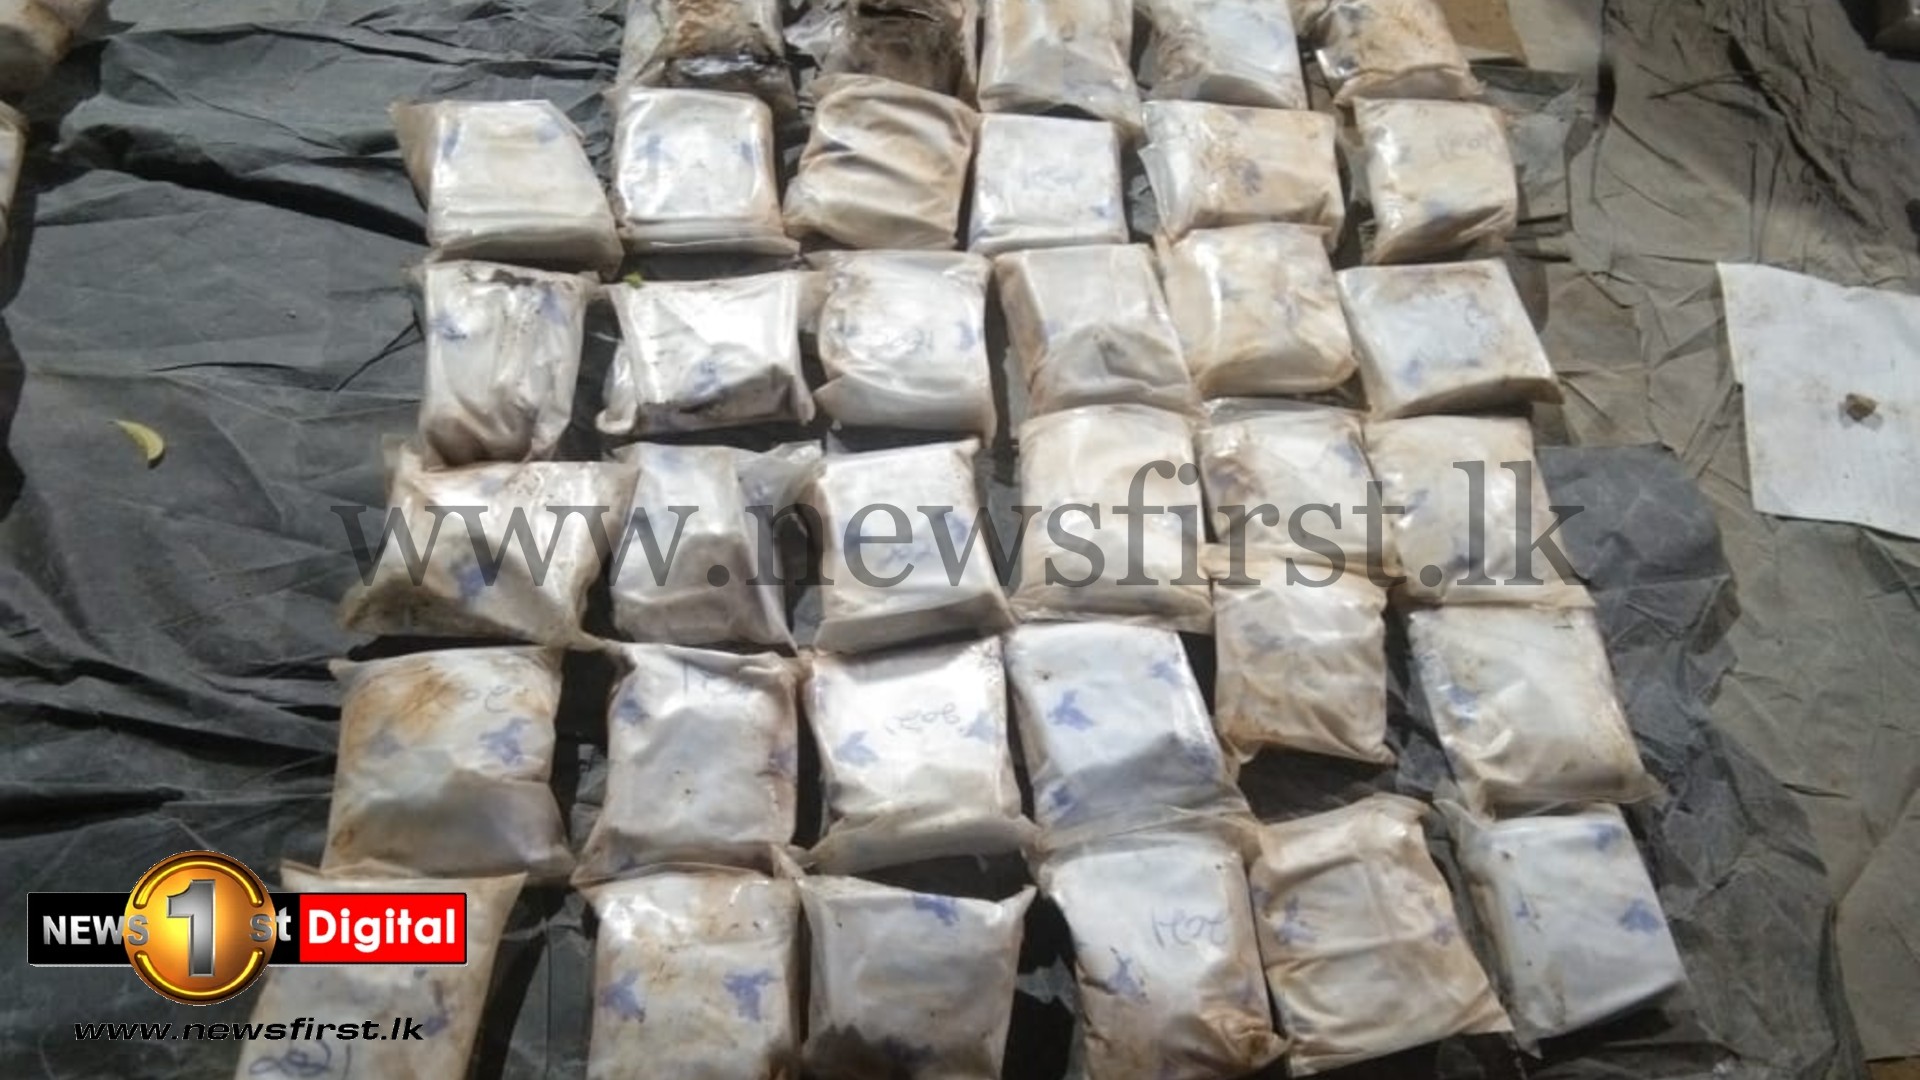 Heroin seized in seas off Weligama belong to ‘Harak Kata’ – Police